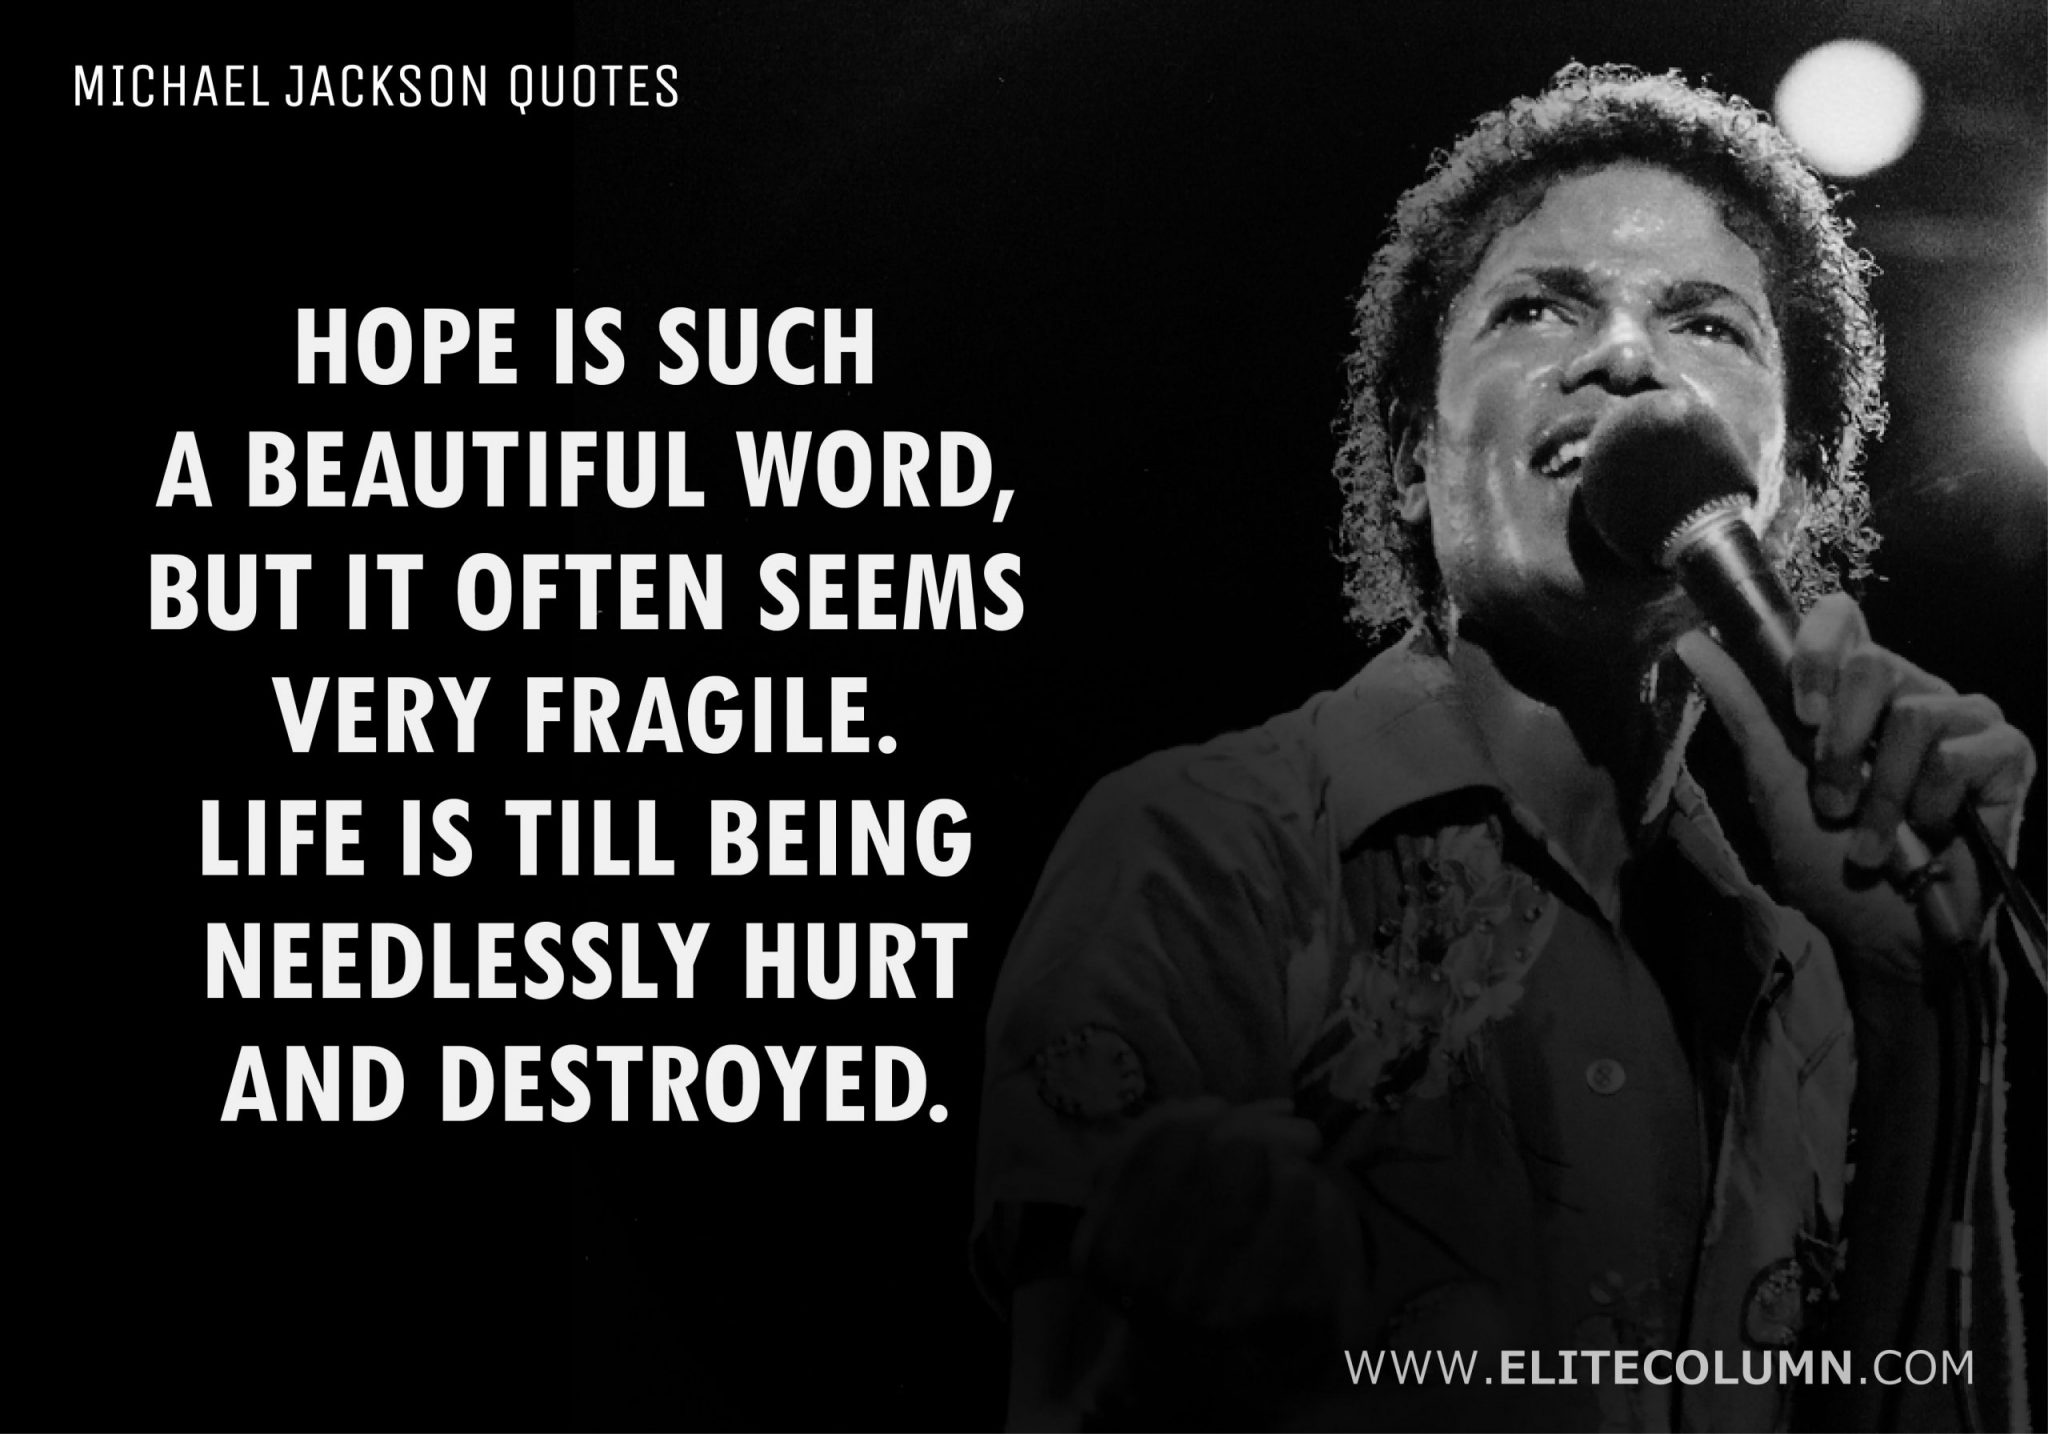 Michael Jackson Quotes (11)